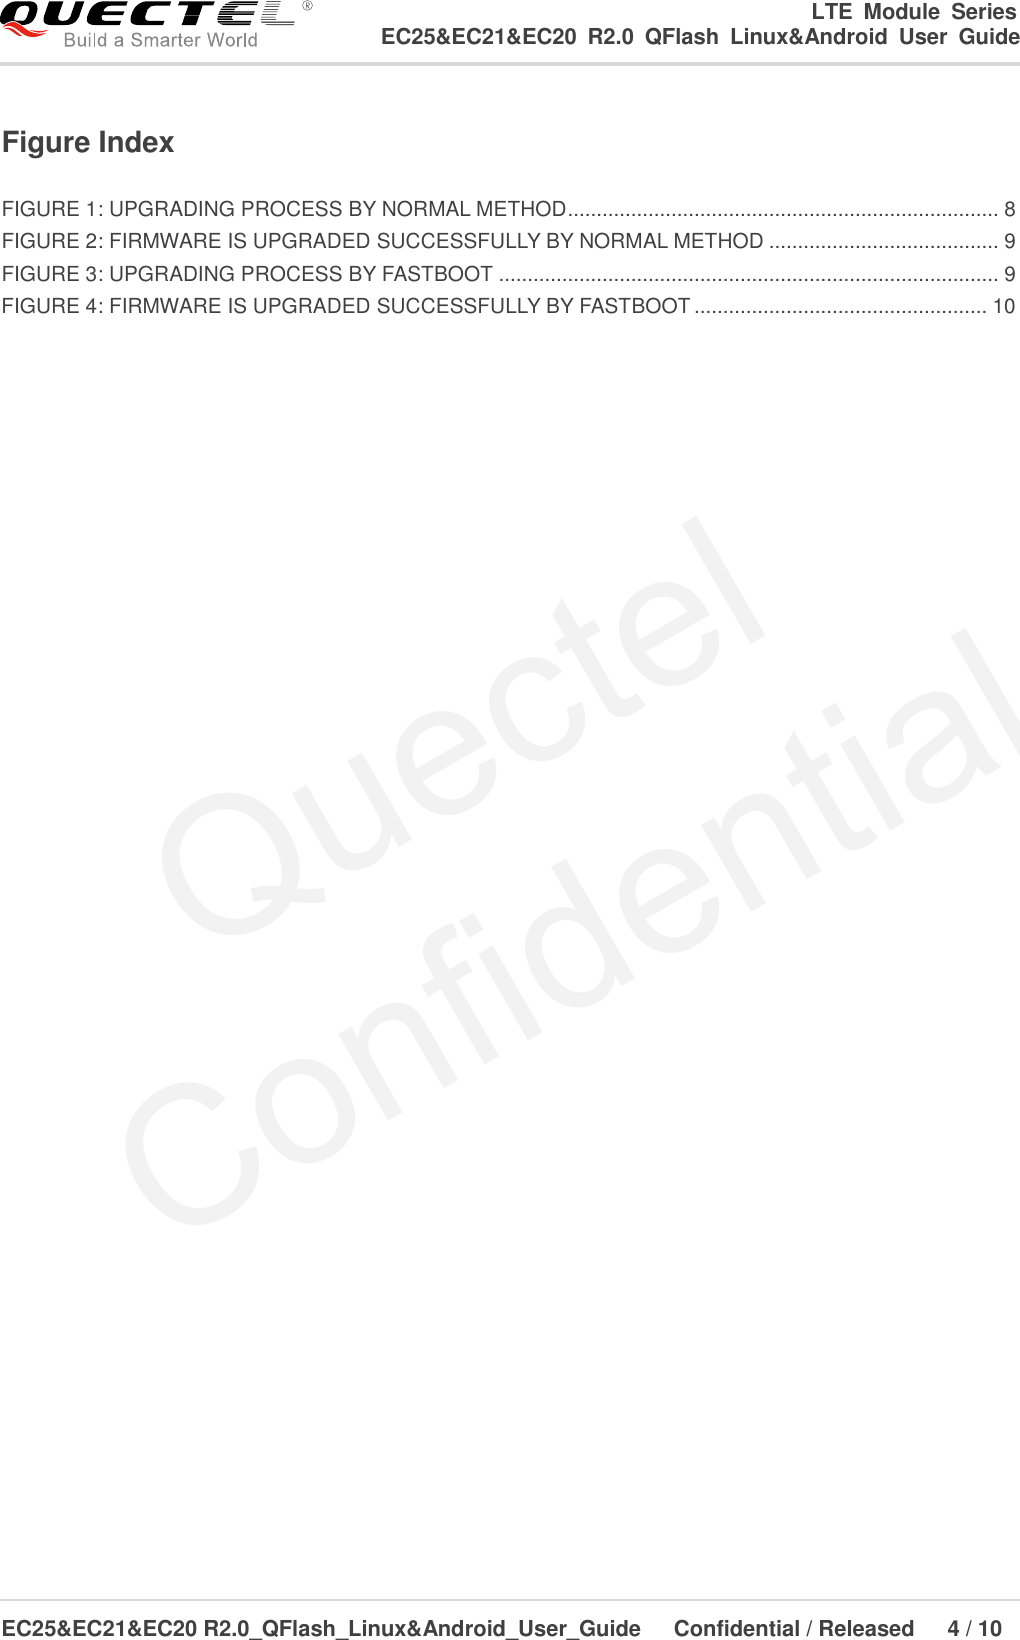 Page 5 of 11 - Quectel EC25&EC21&EC20 R2.0 QFlash Linux&Android User Guide V1.0